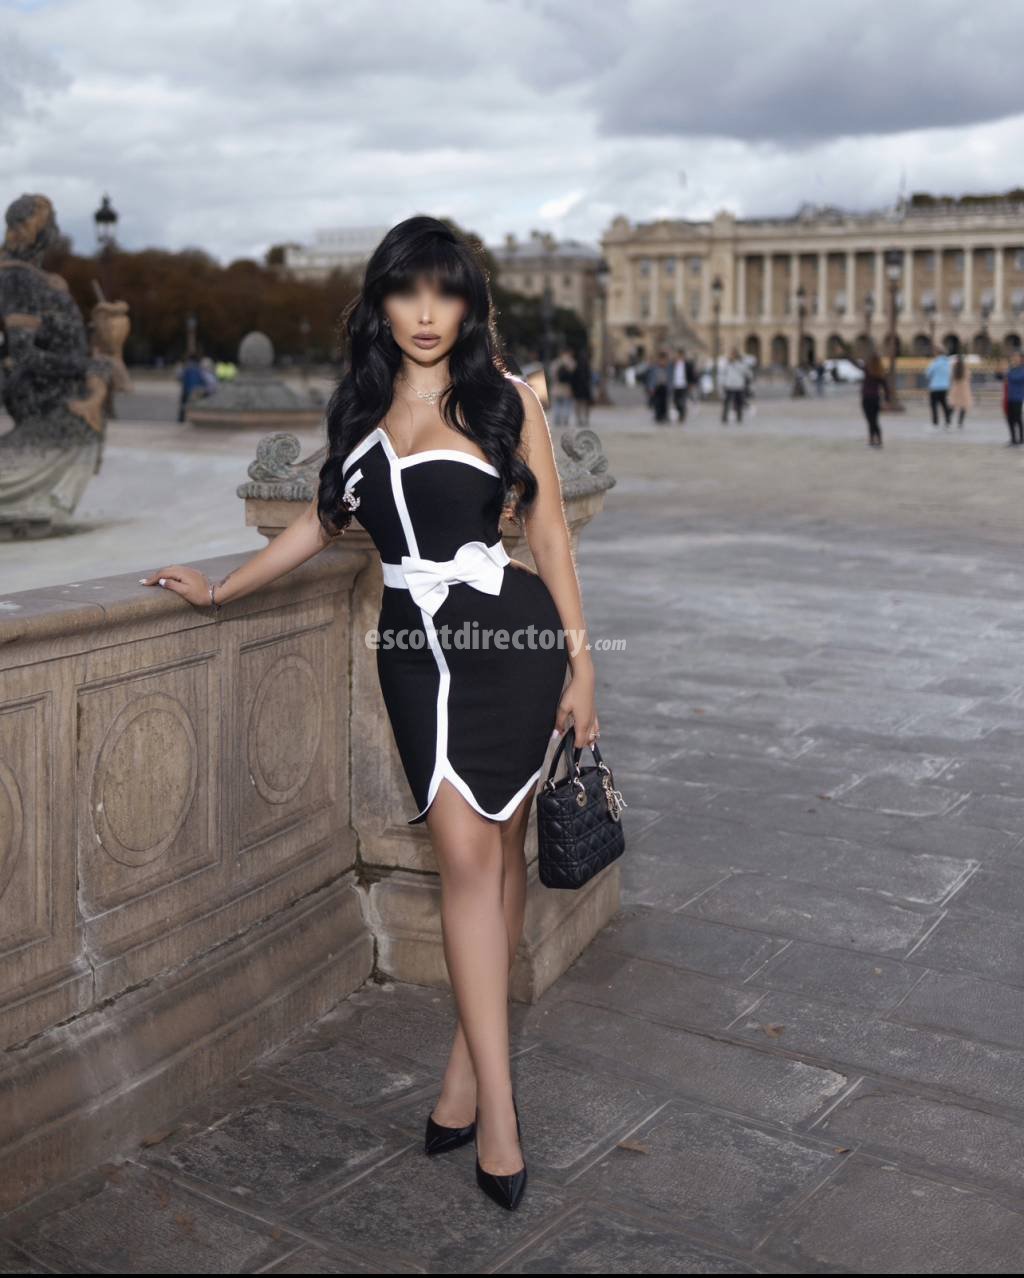 Ayah-Bella Vip Escort escort in Paris offers Pompino senza preservativo fino al completamento services